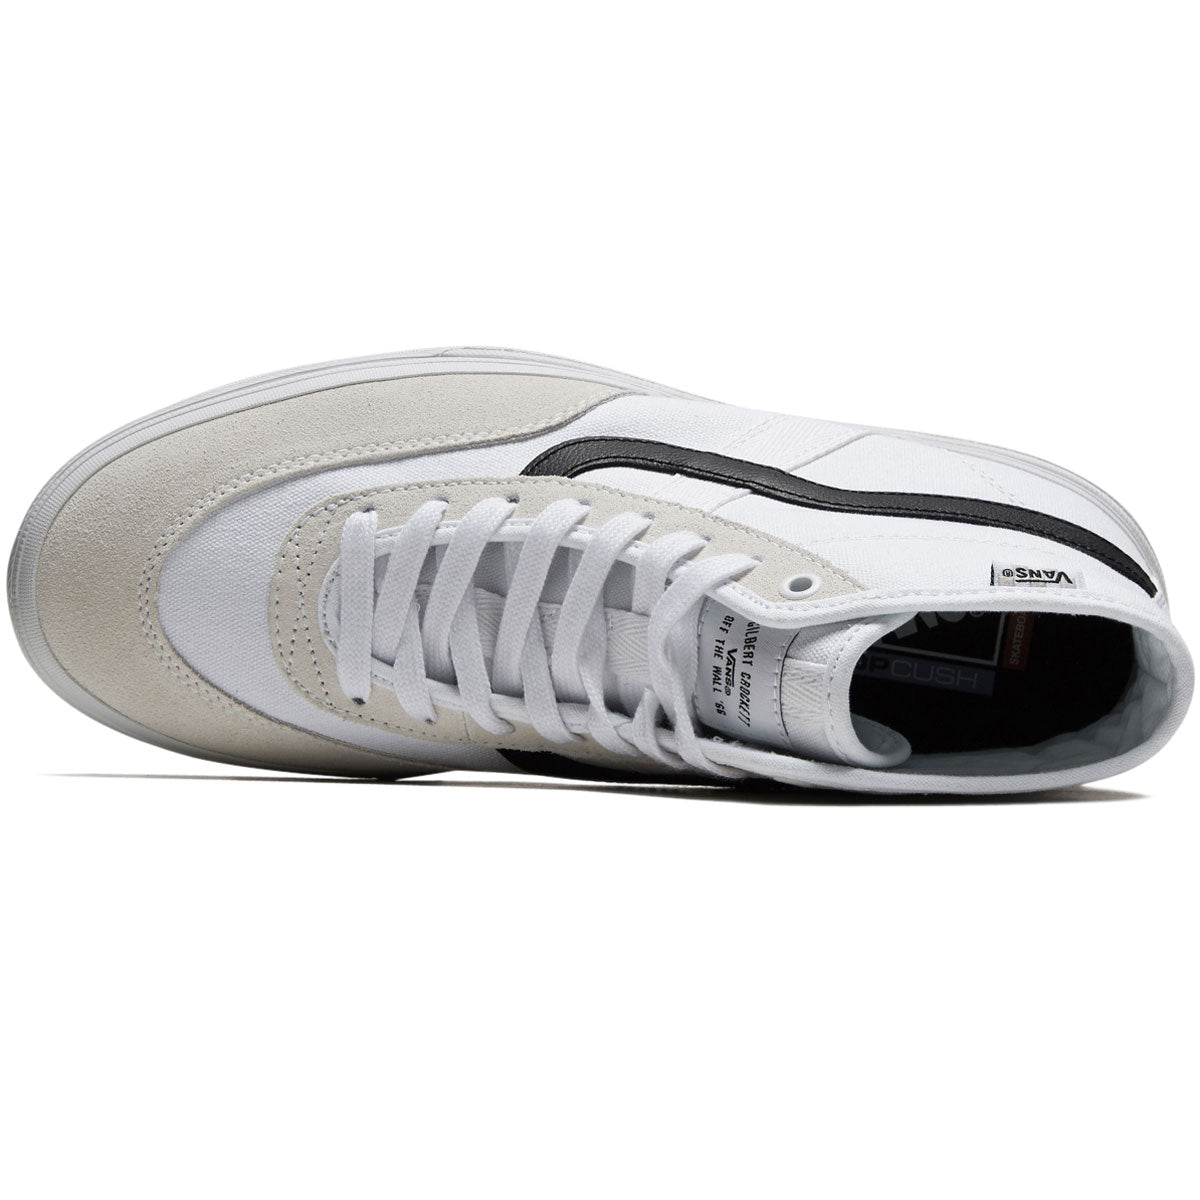 Vans Crockett High Shoes - White/Black/Gum image 3